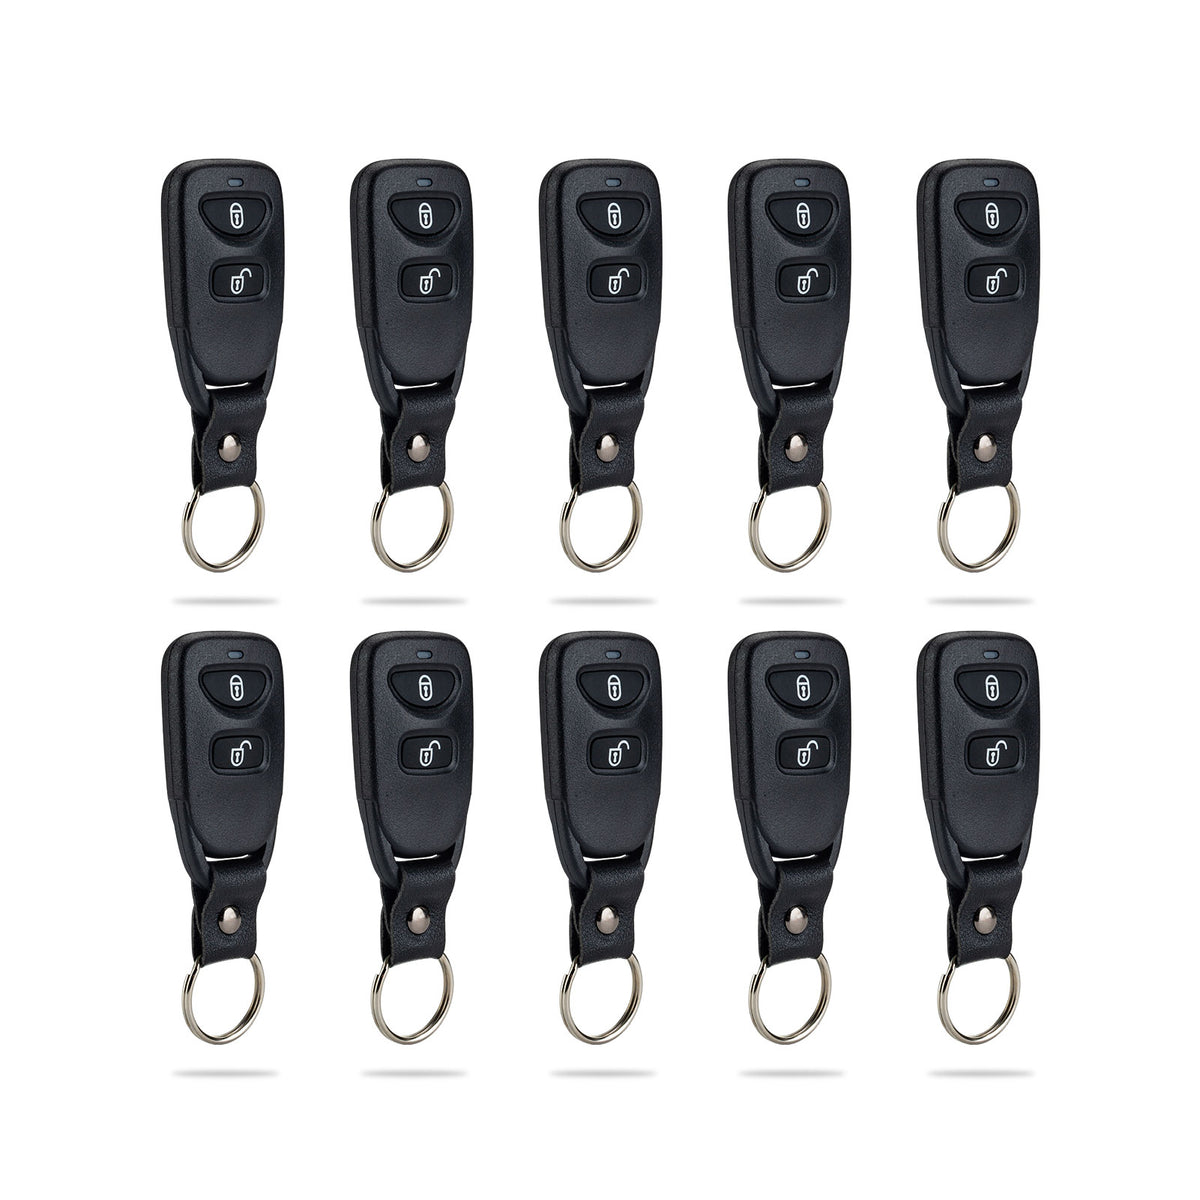 3 BTN Car Key Fob Replacement for Kia Soul 2010 - 2013 NYOSEKS-AM08TX. 95430-2K100  KR-K3RH